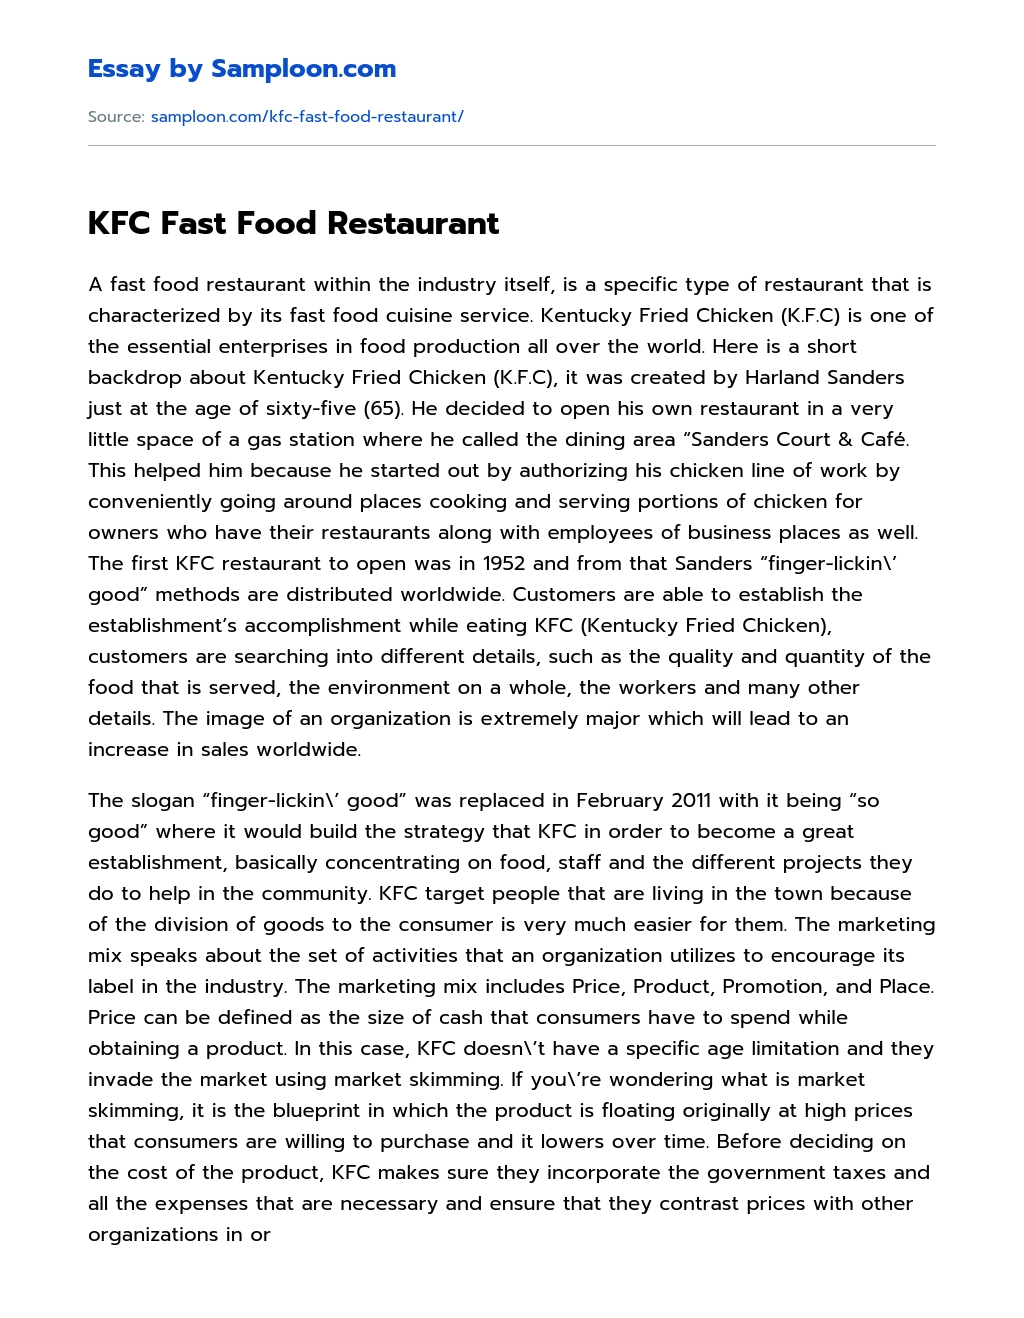 KFC Fast Food Restaurant Review essay